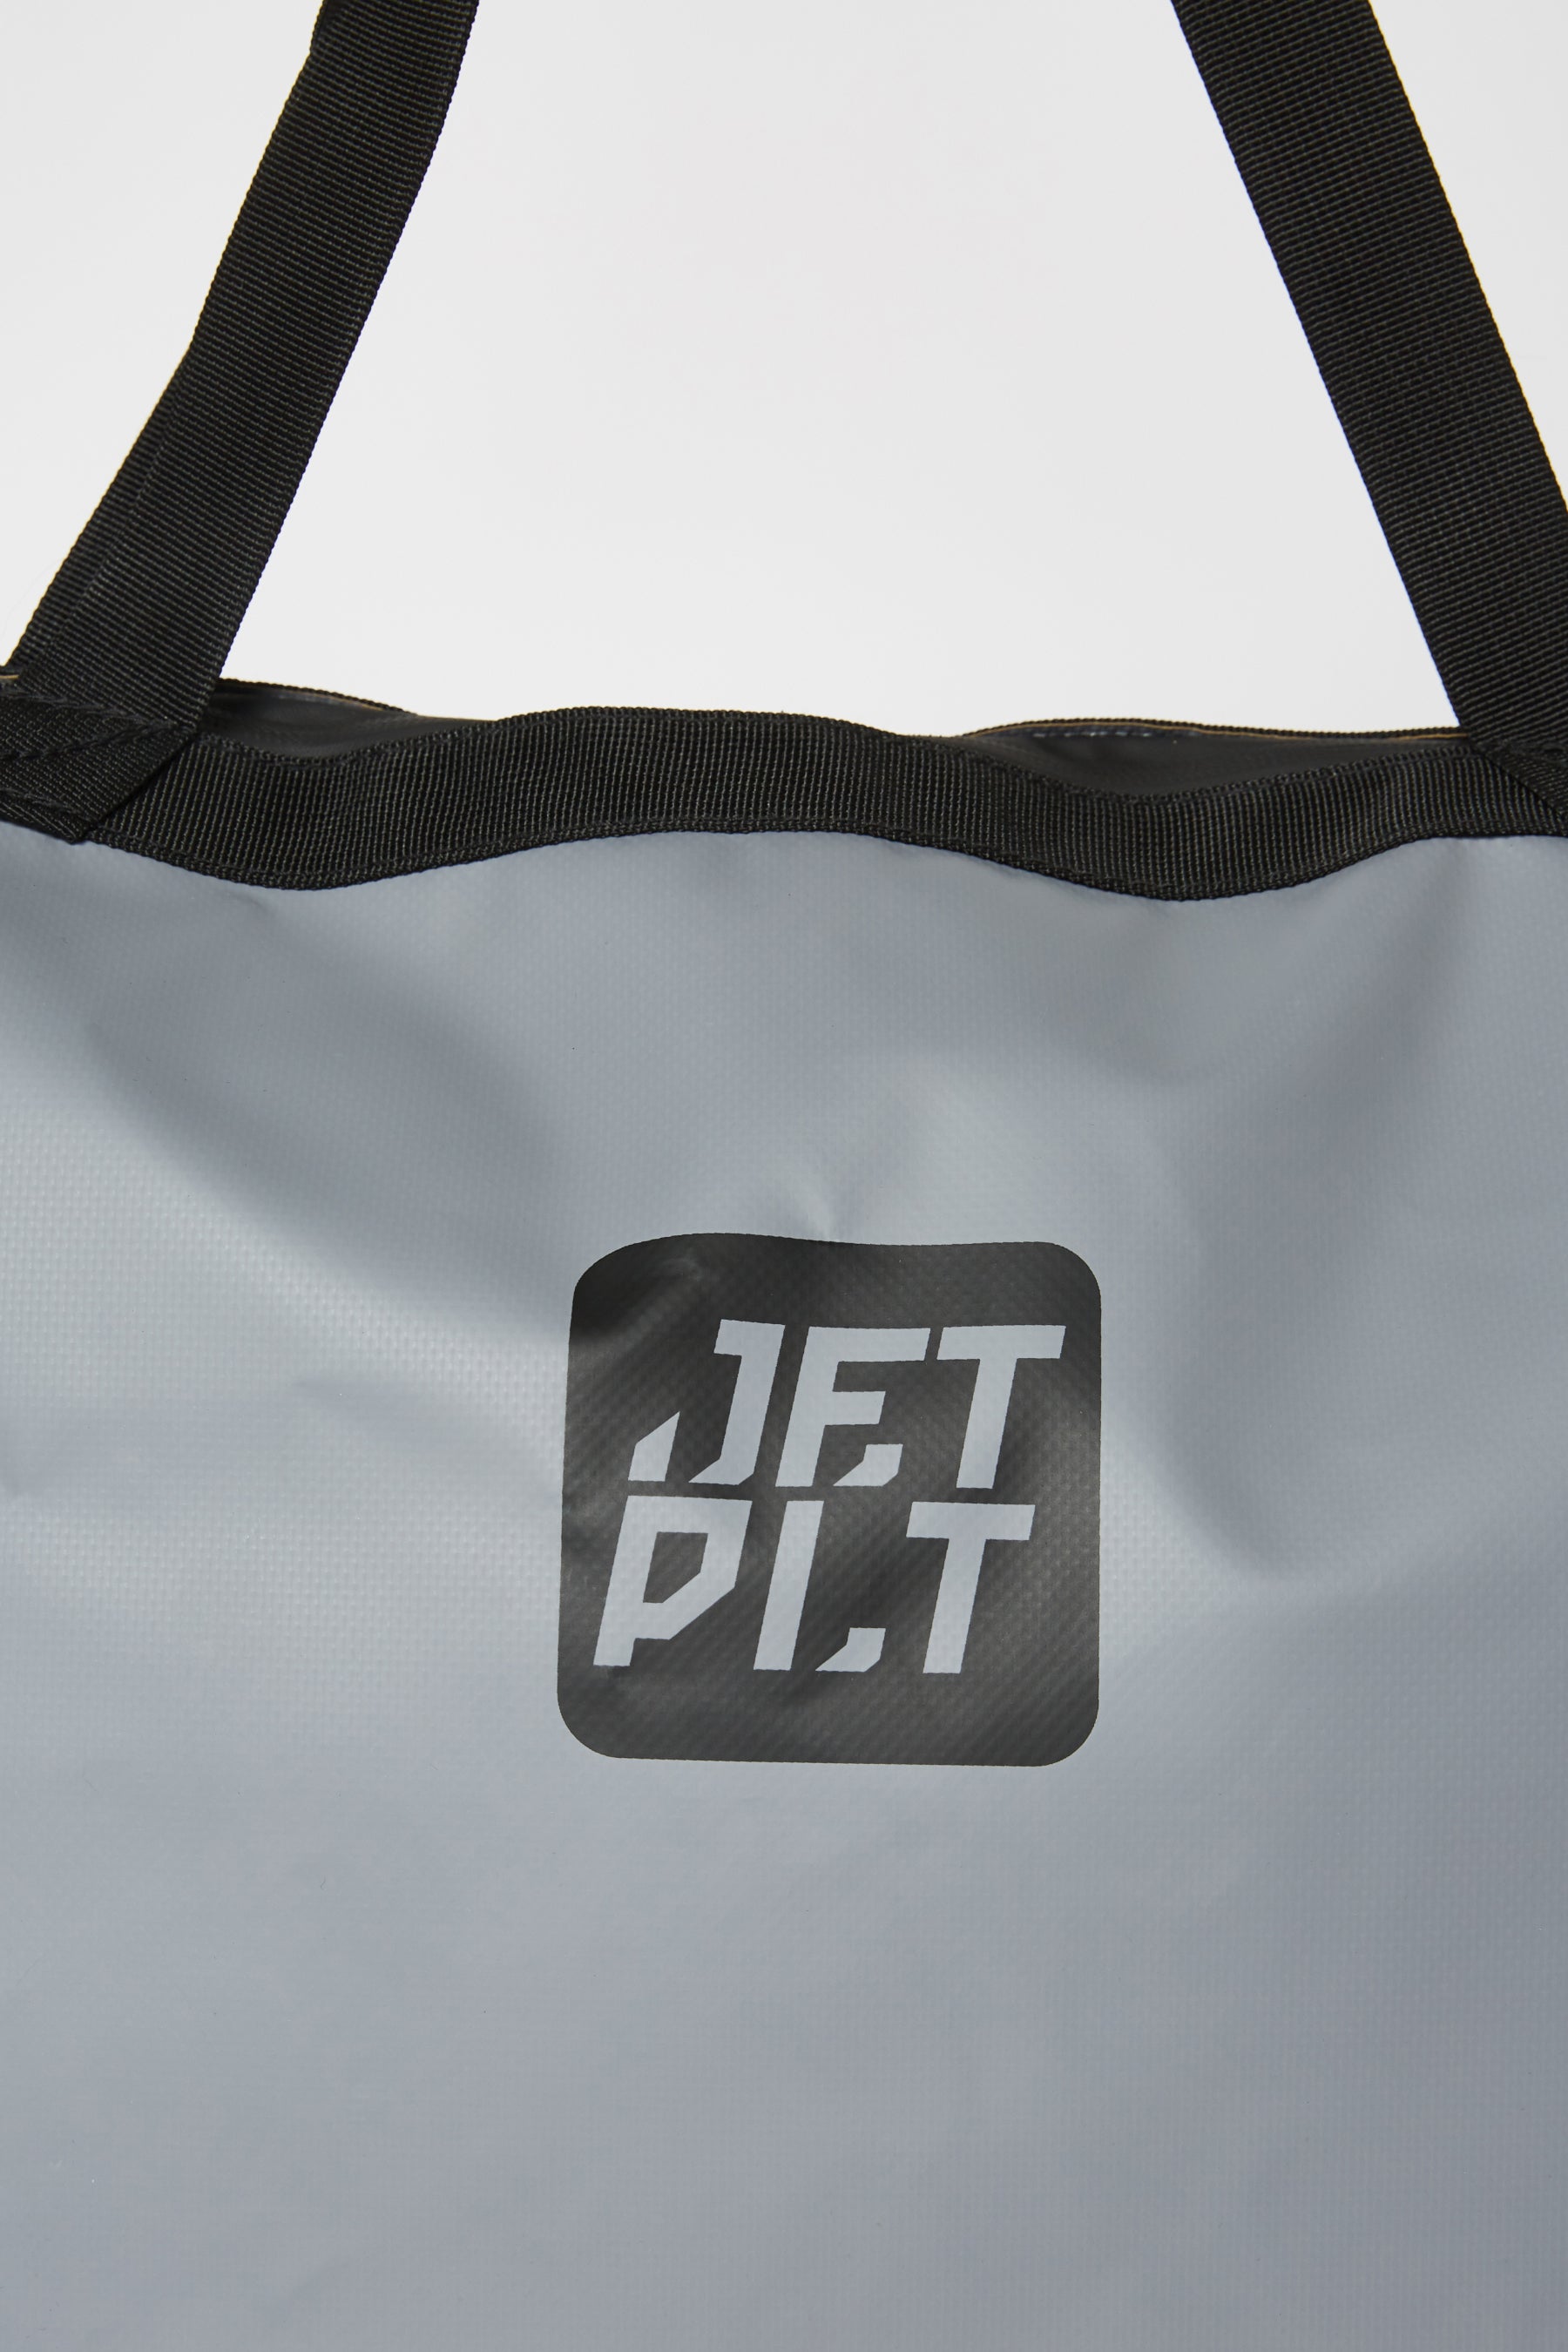 Jetpilot Venture 70l Oversized Tote - Grey Lifestyle 8